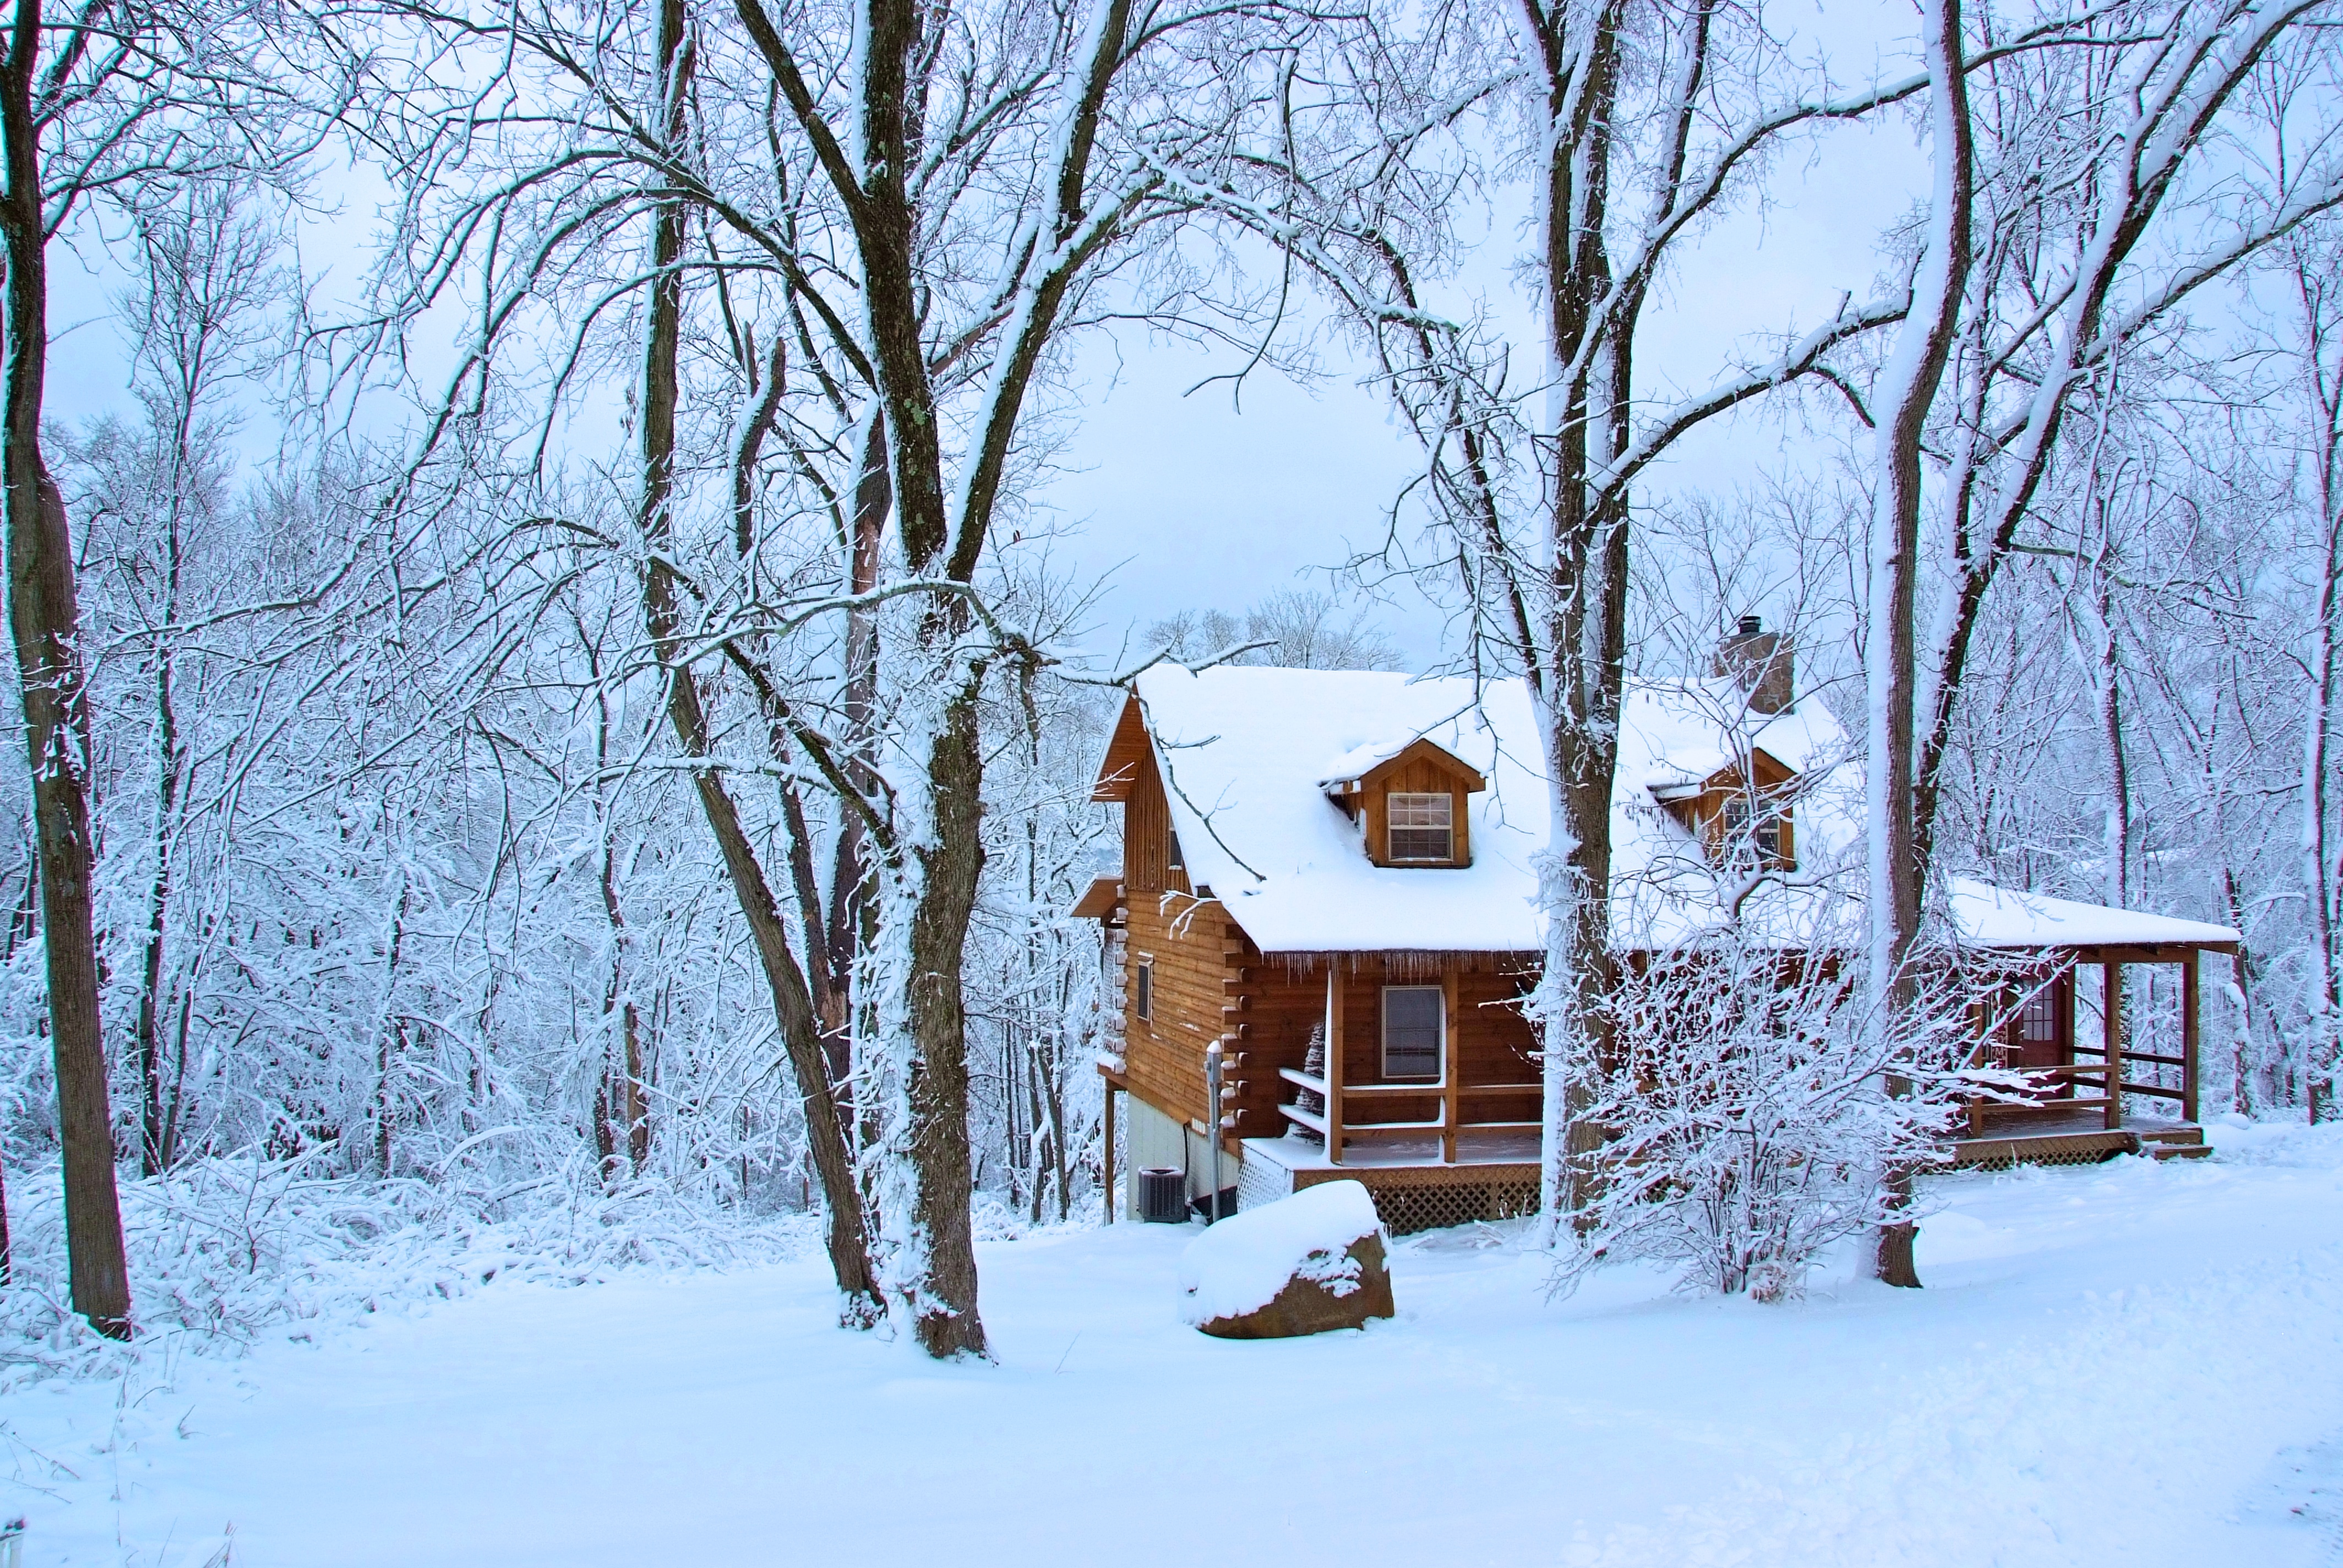 Hocking Hills Cabin In Snow - HD Wallpaper 